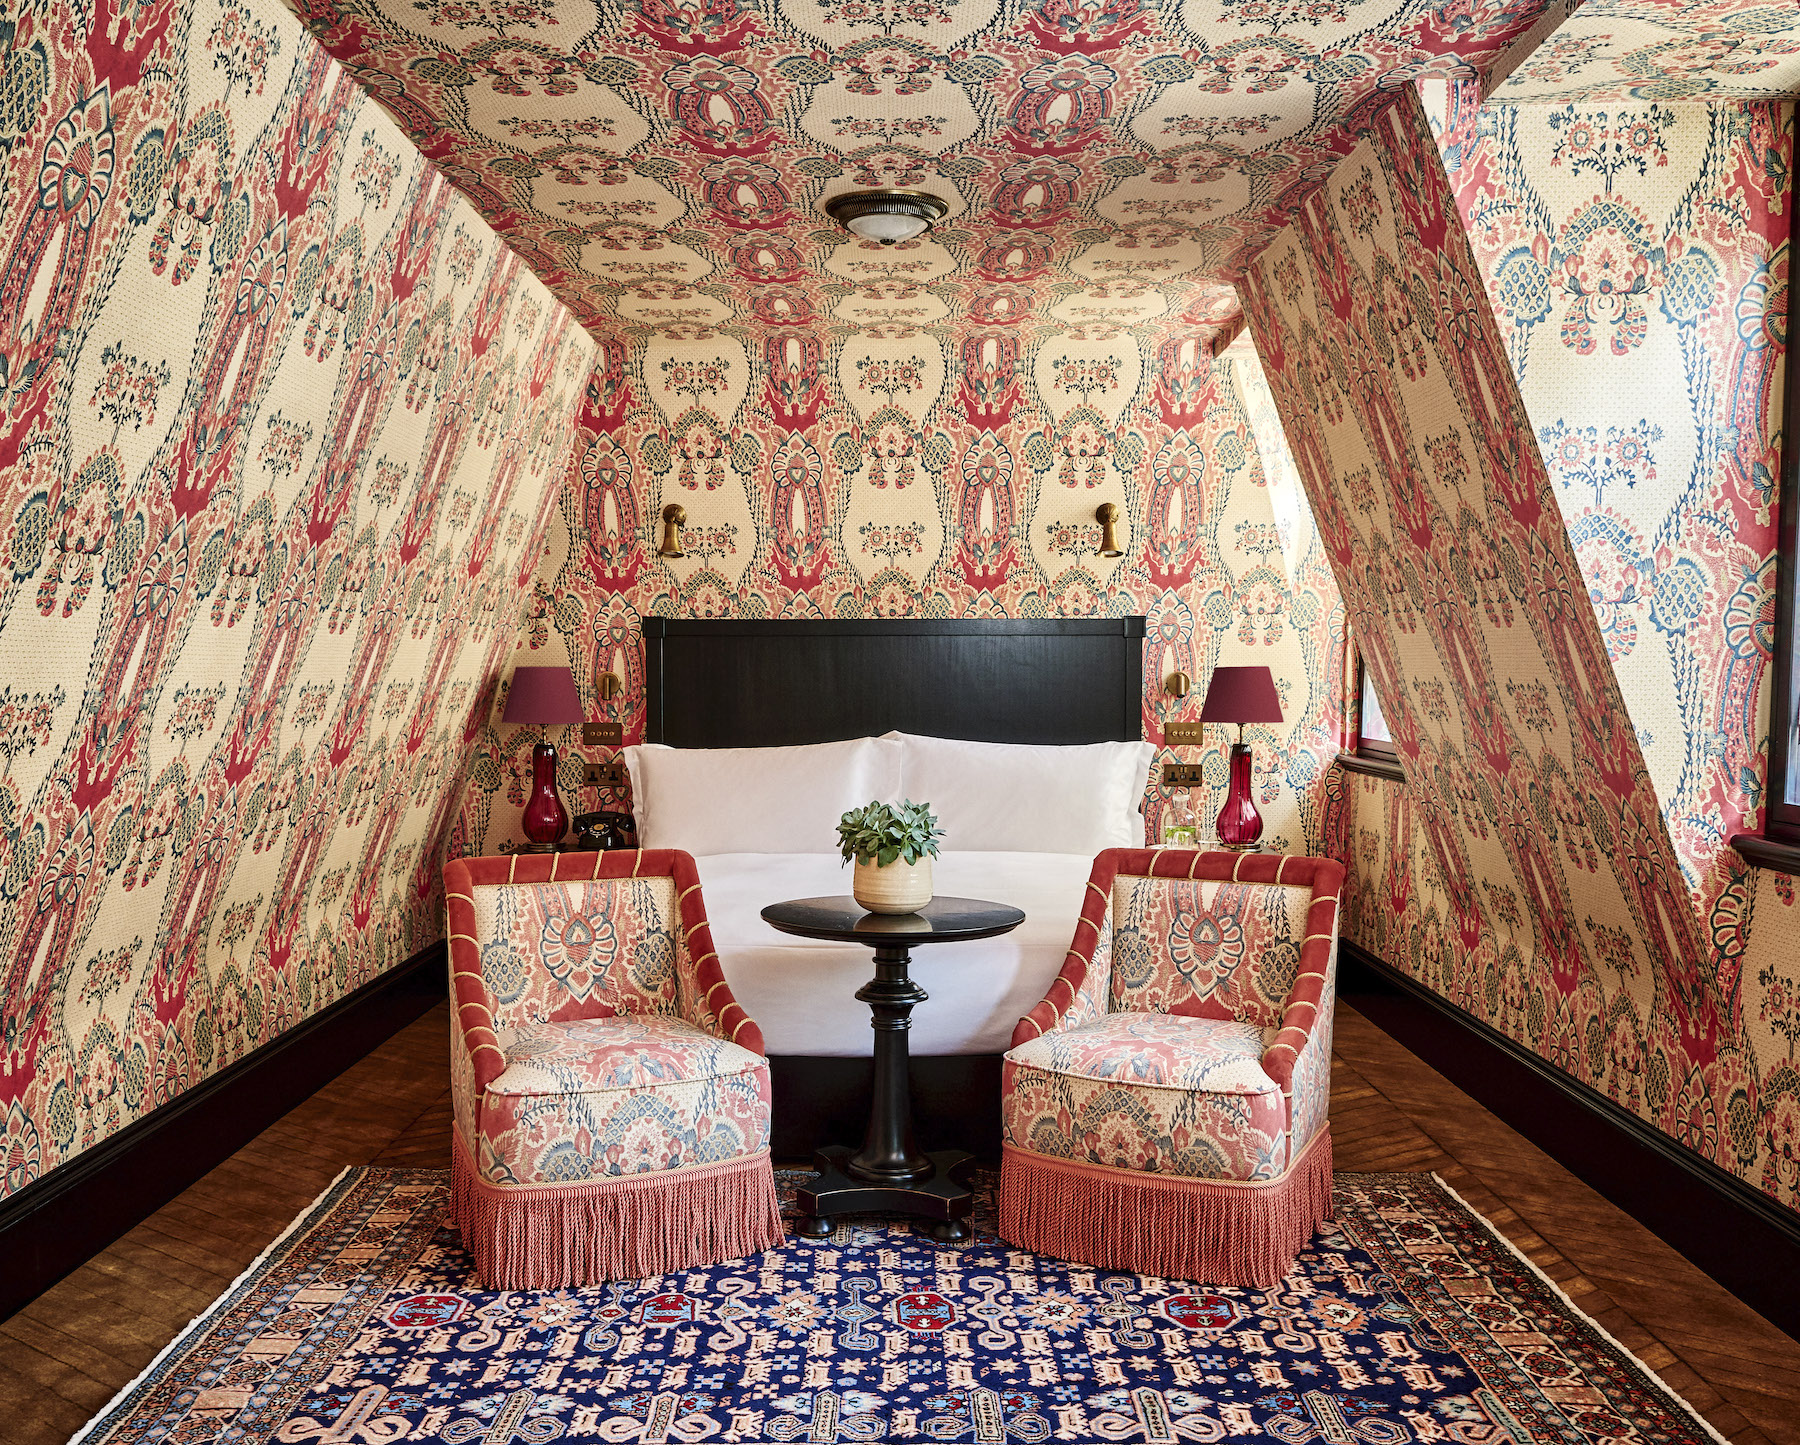 A bedroom at London hotel The Twenty Two by interior designer Natalia Miyar in Effect Magazine